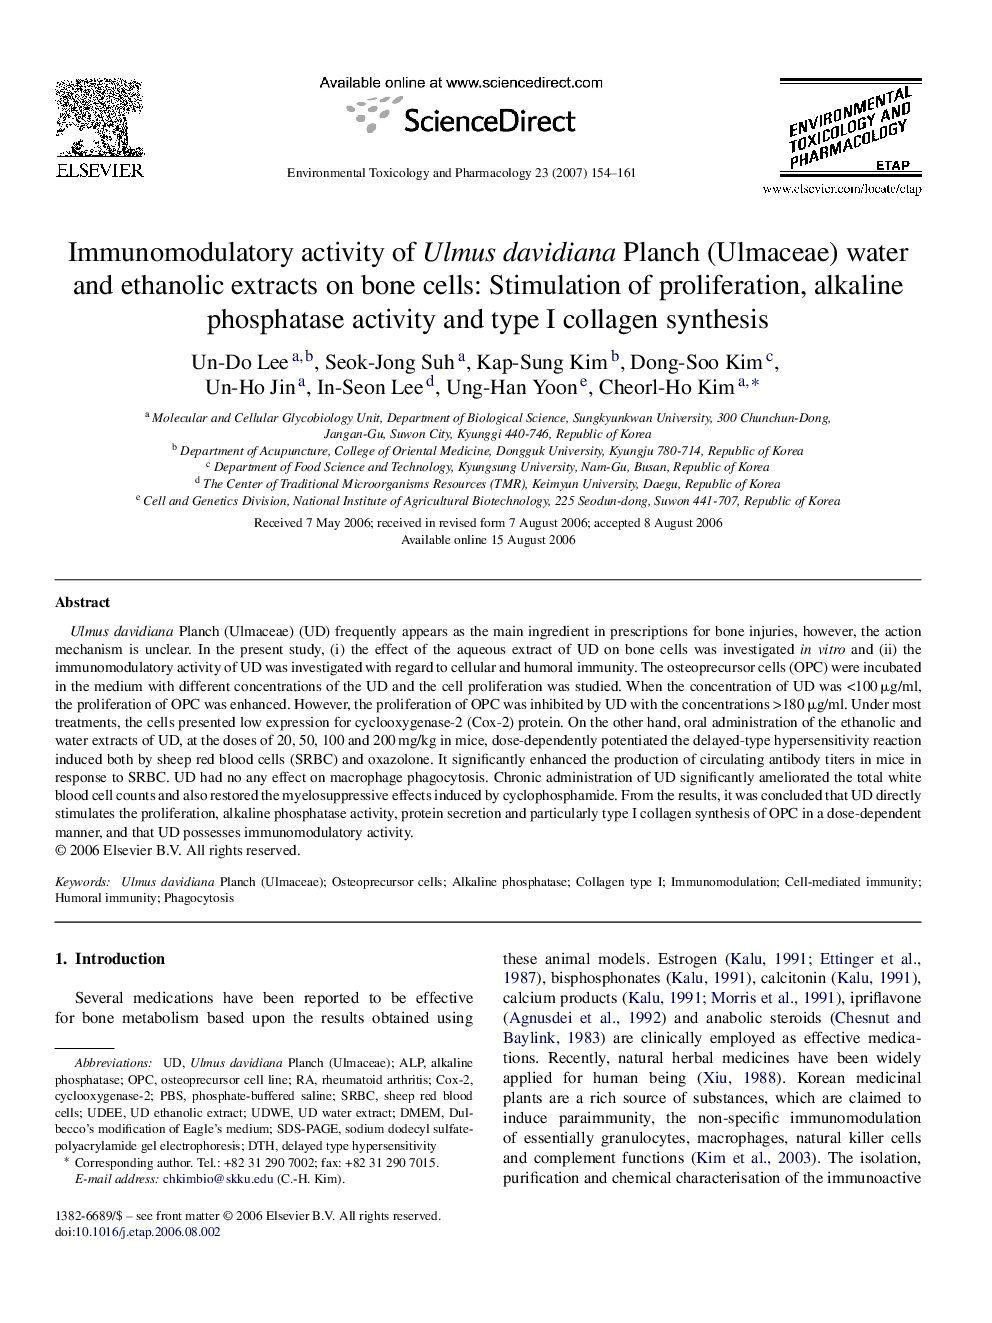 Immunomodulatory activity of Ulmus davidiana Planch (Ulmaceae) water and ethanolic extracts on bone cells: Stimulation of proliferation, alkaline phosphatase activity and type I collagen synthesis